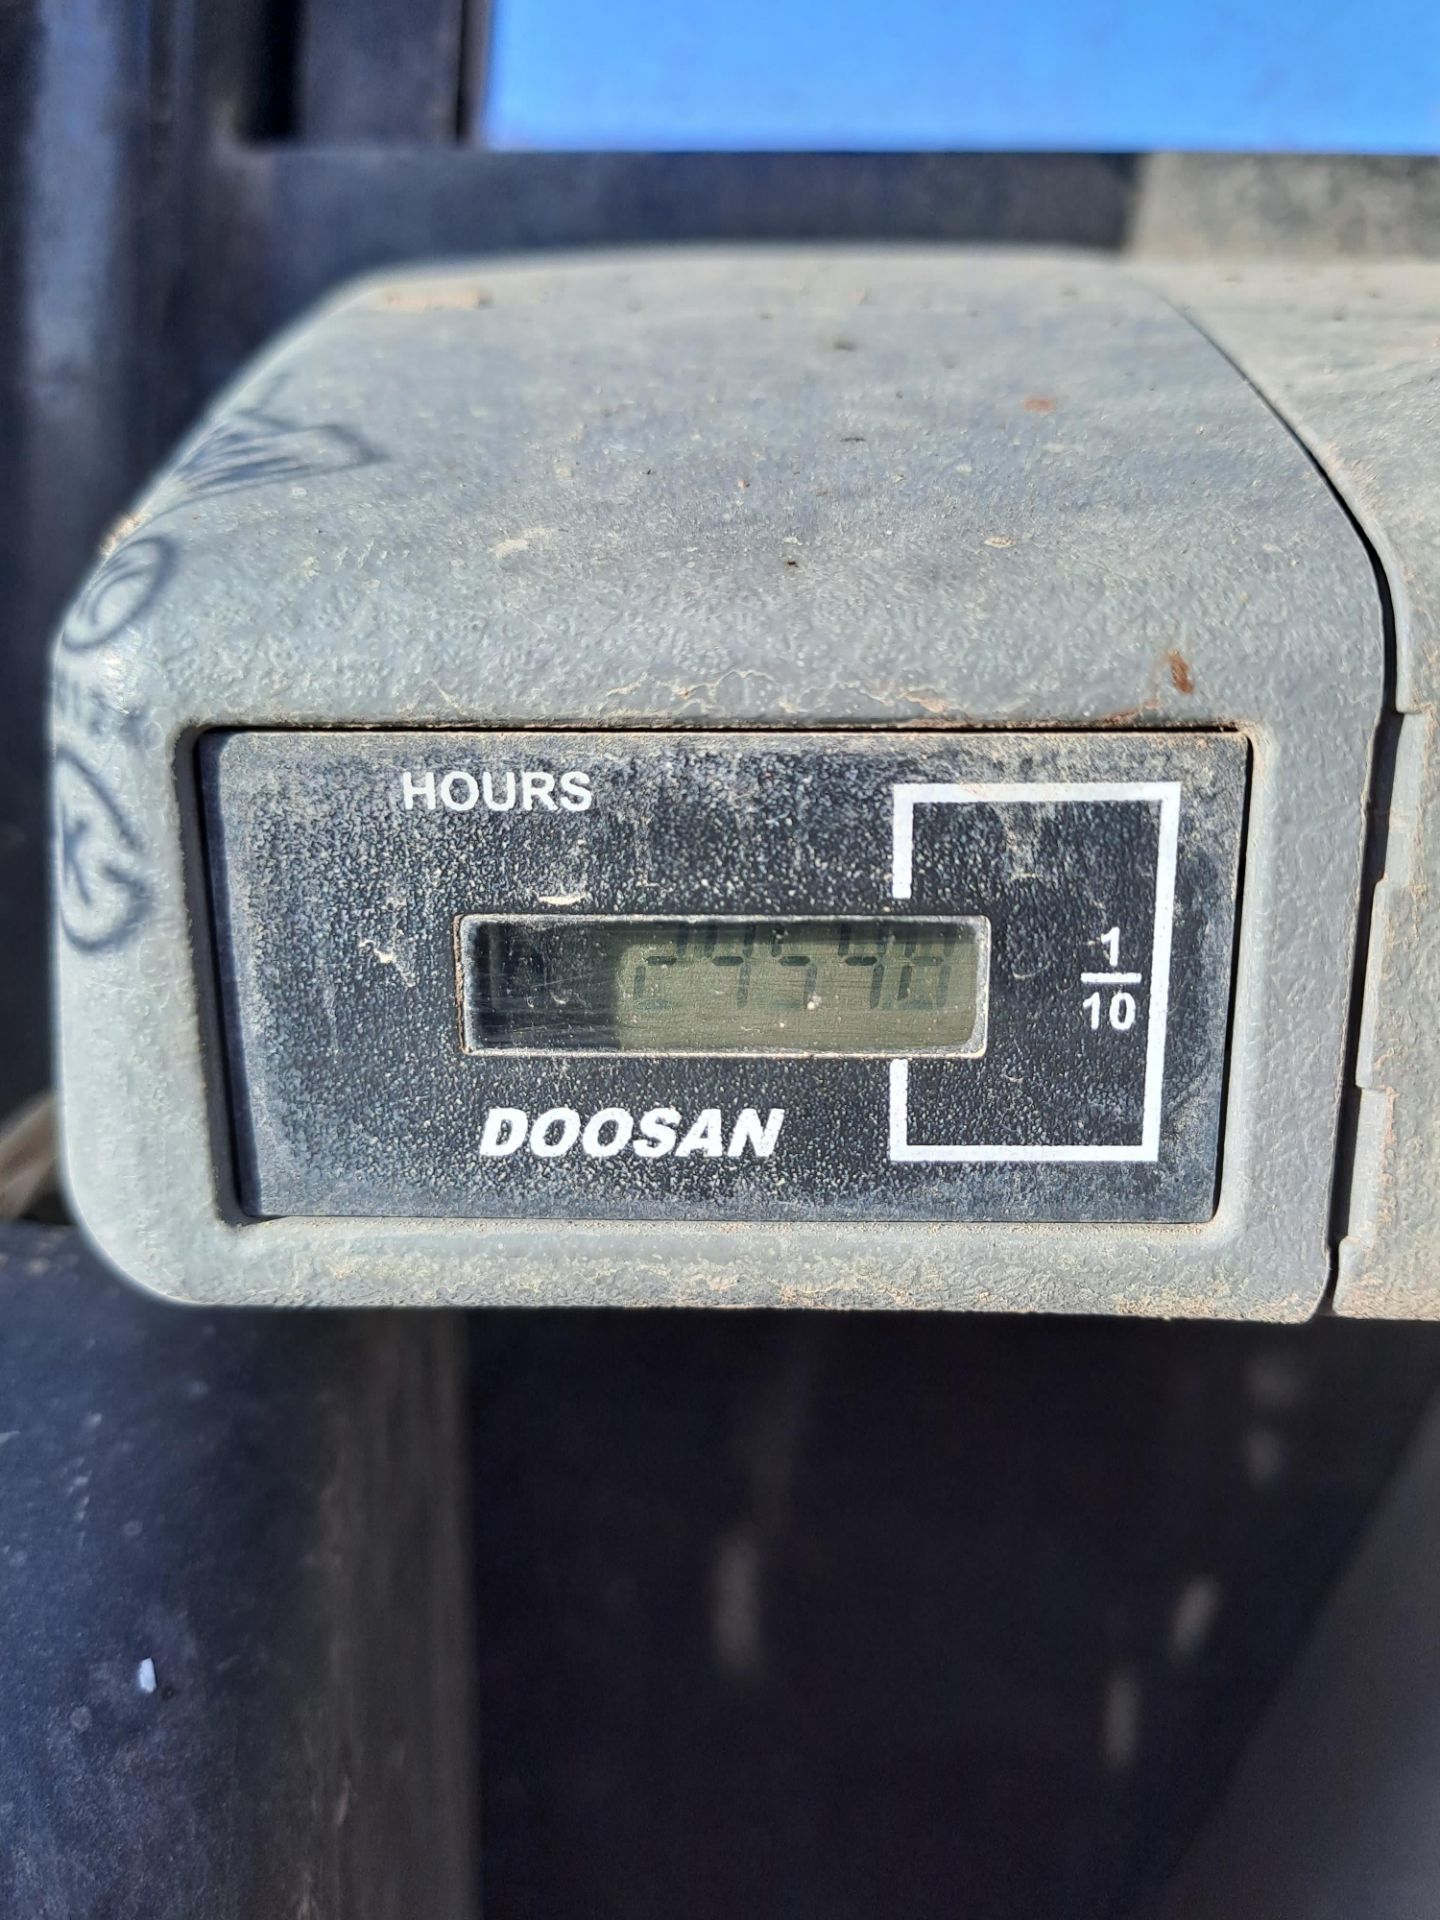 Doosan DX63-3 6t excavator, serial no. DHKCEAAYEK6002431, Year: 2020, hours: 2,444, Key: 1, with - Image 15 of 16